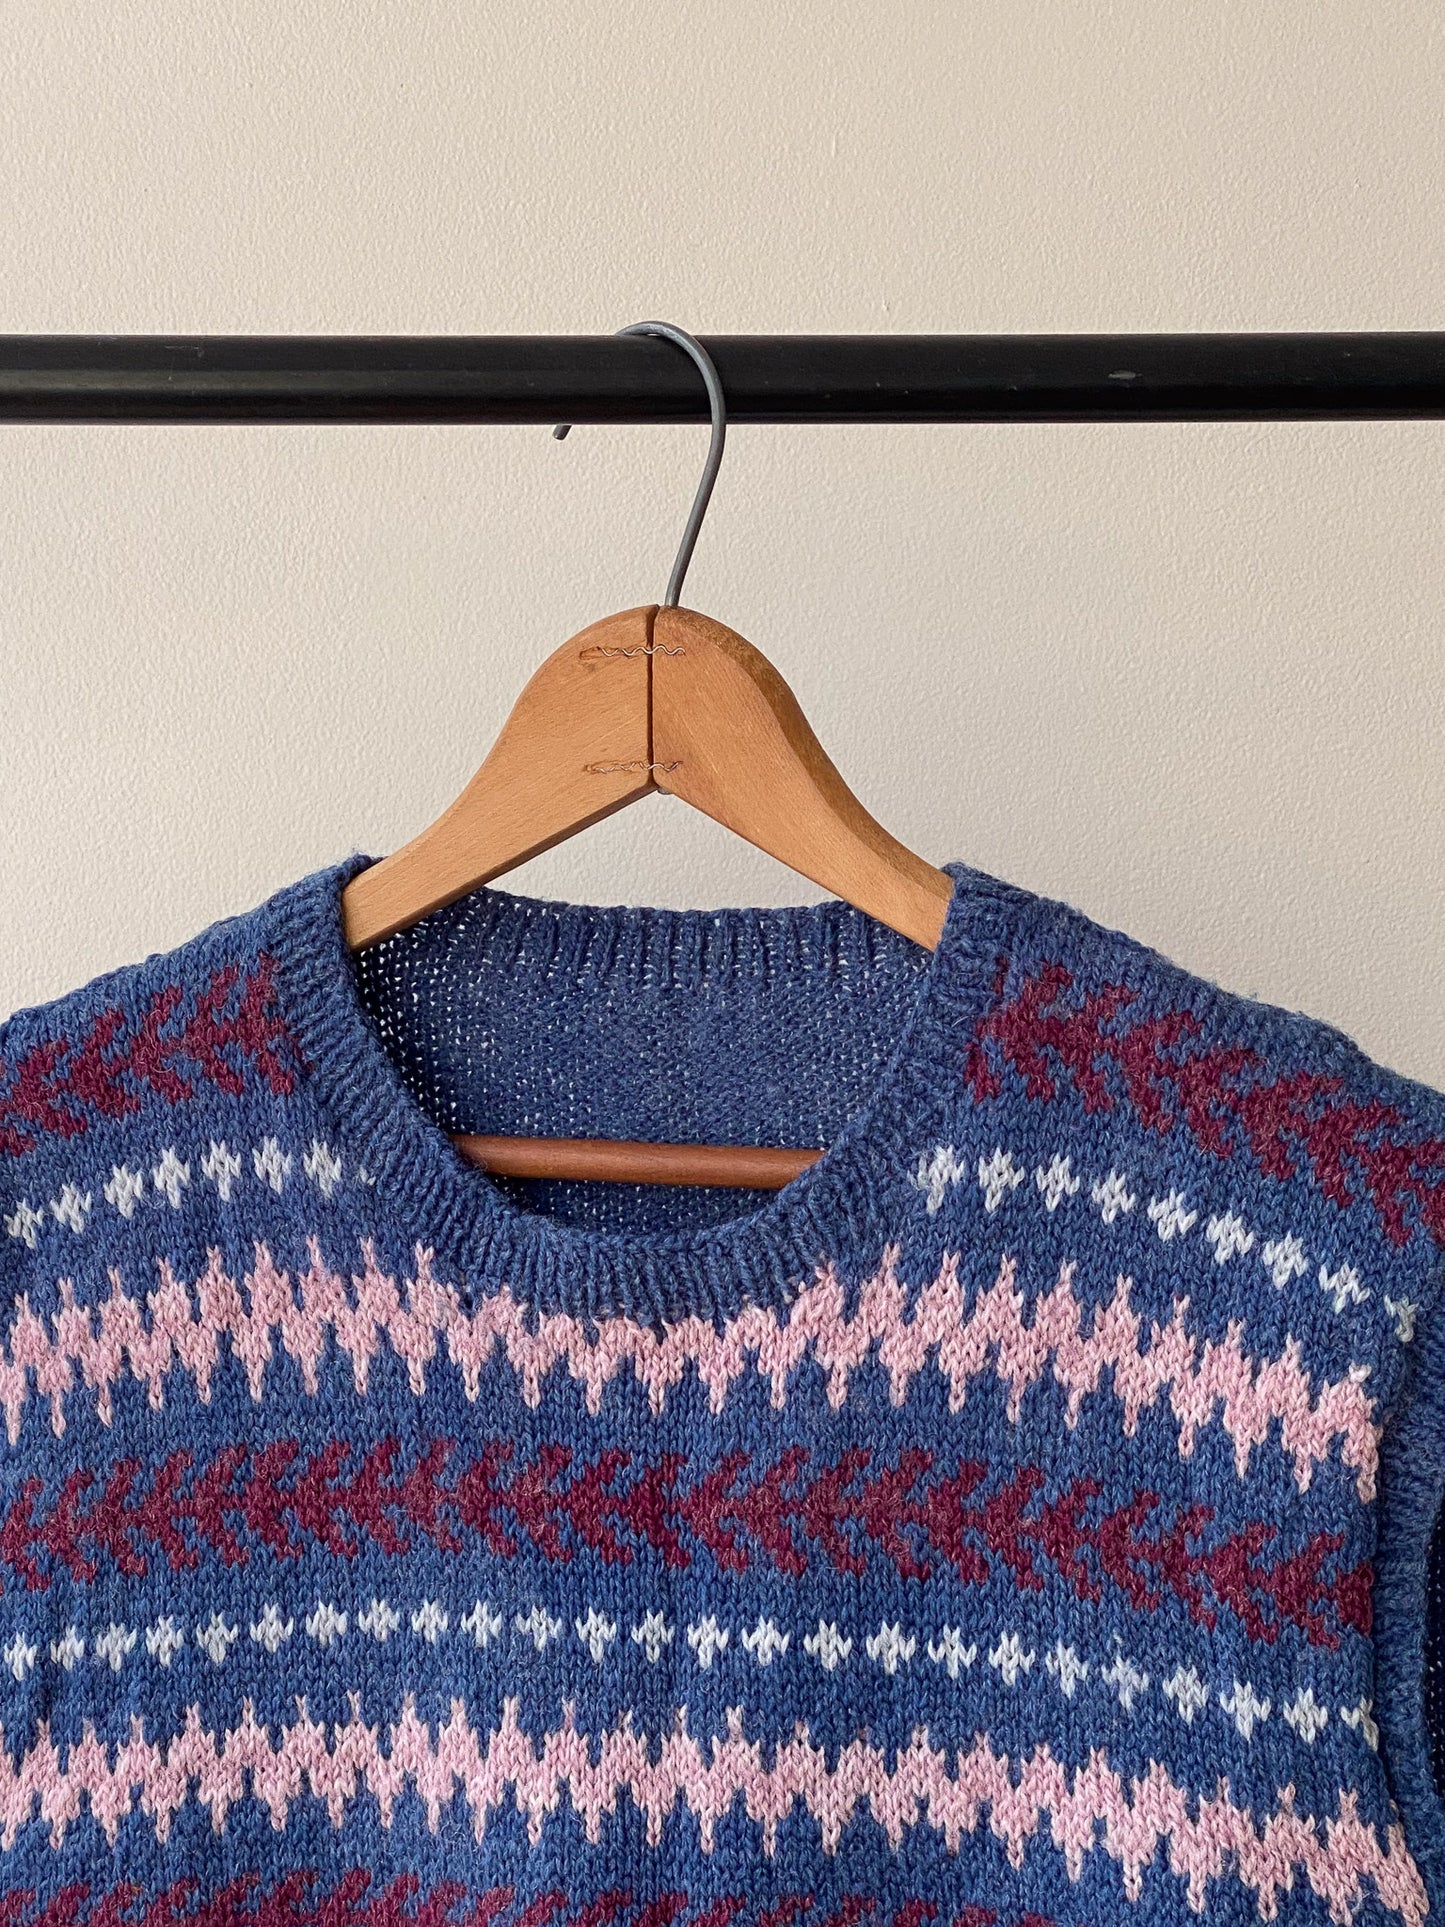 Handmade Patterned Sweater Vest—[M]